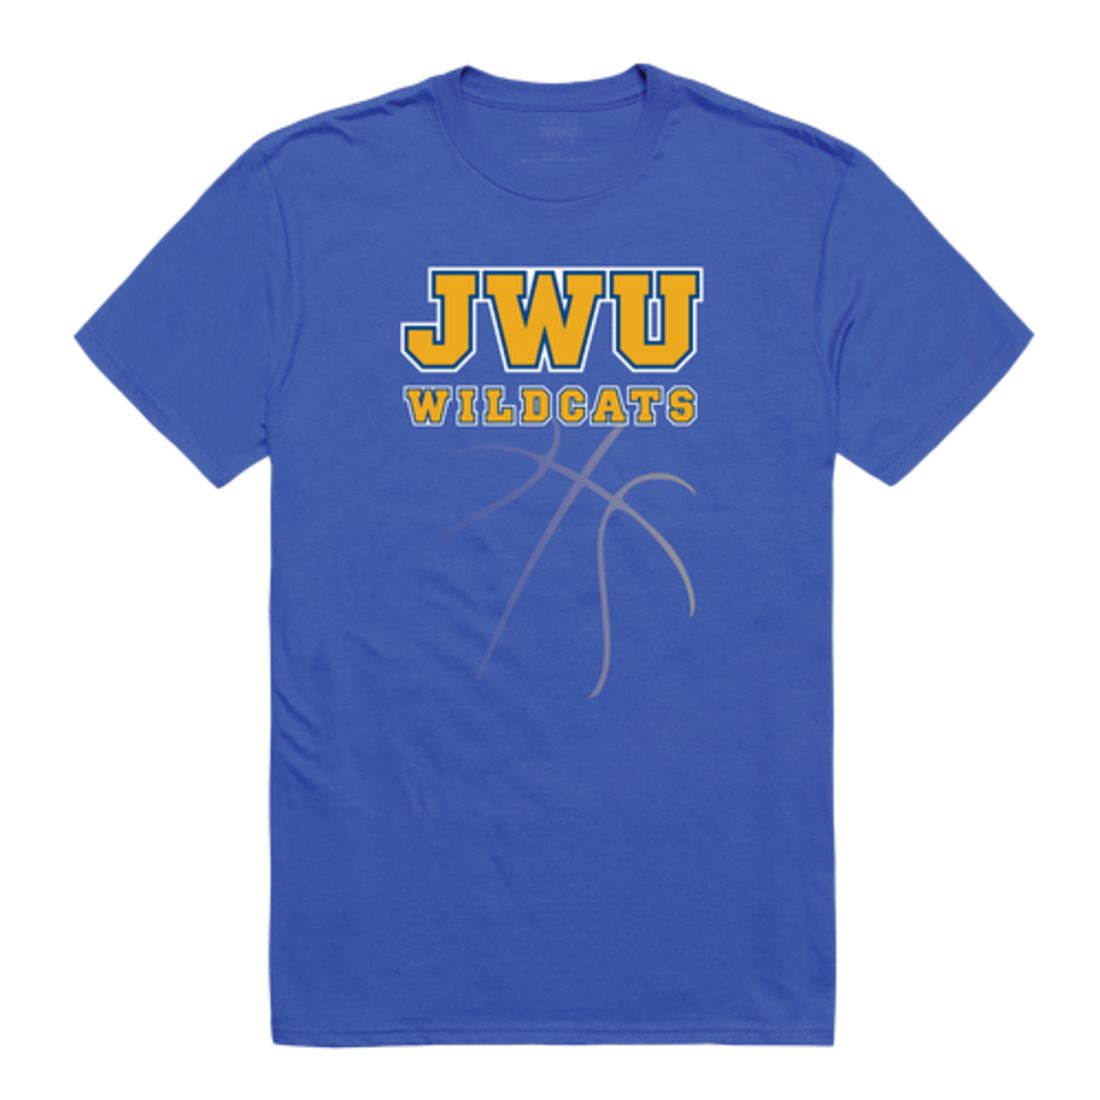 Johnson & Wales University Wildcats Basketball T-Shirt Tee